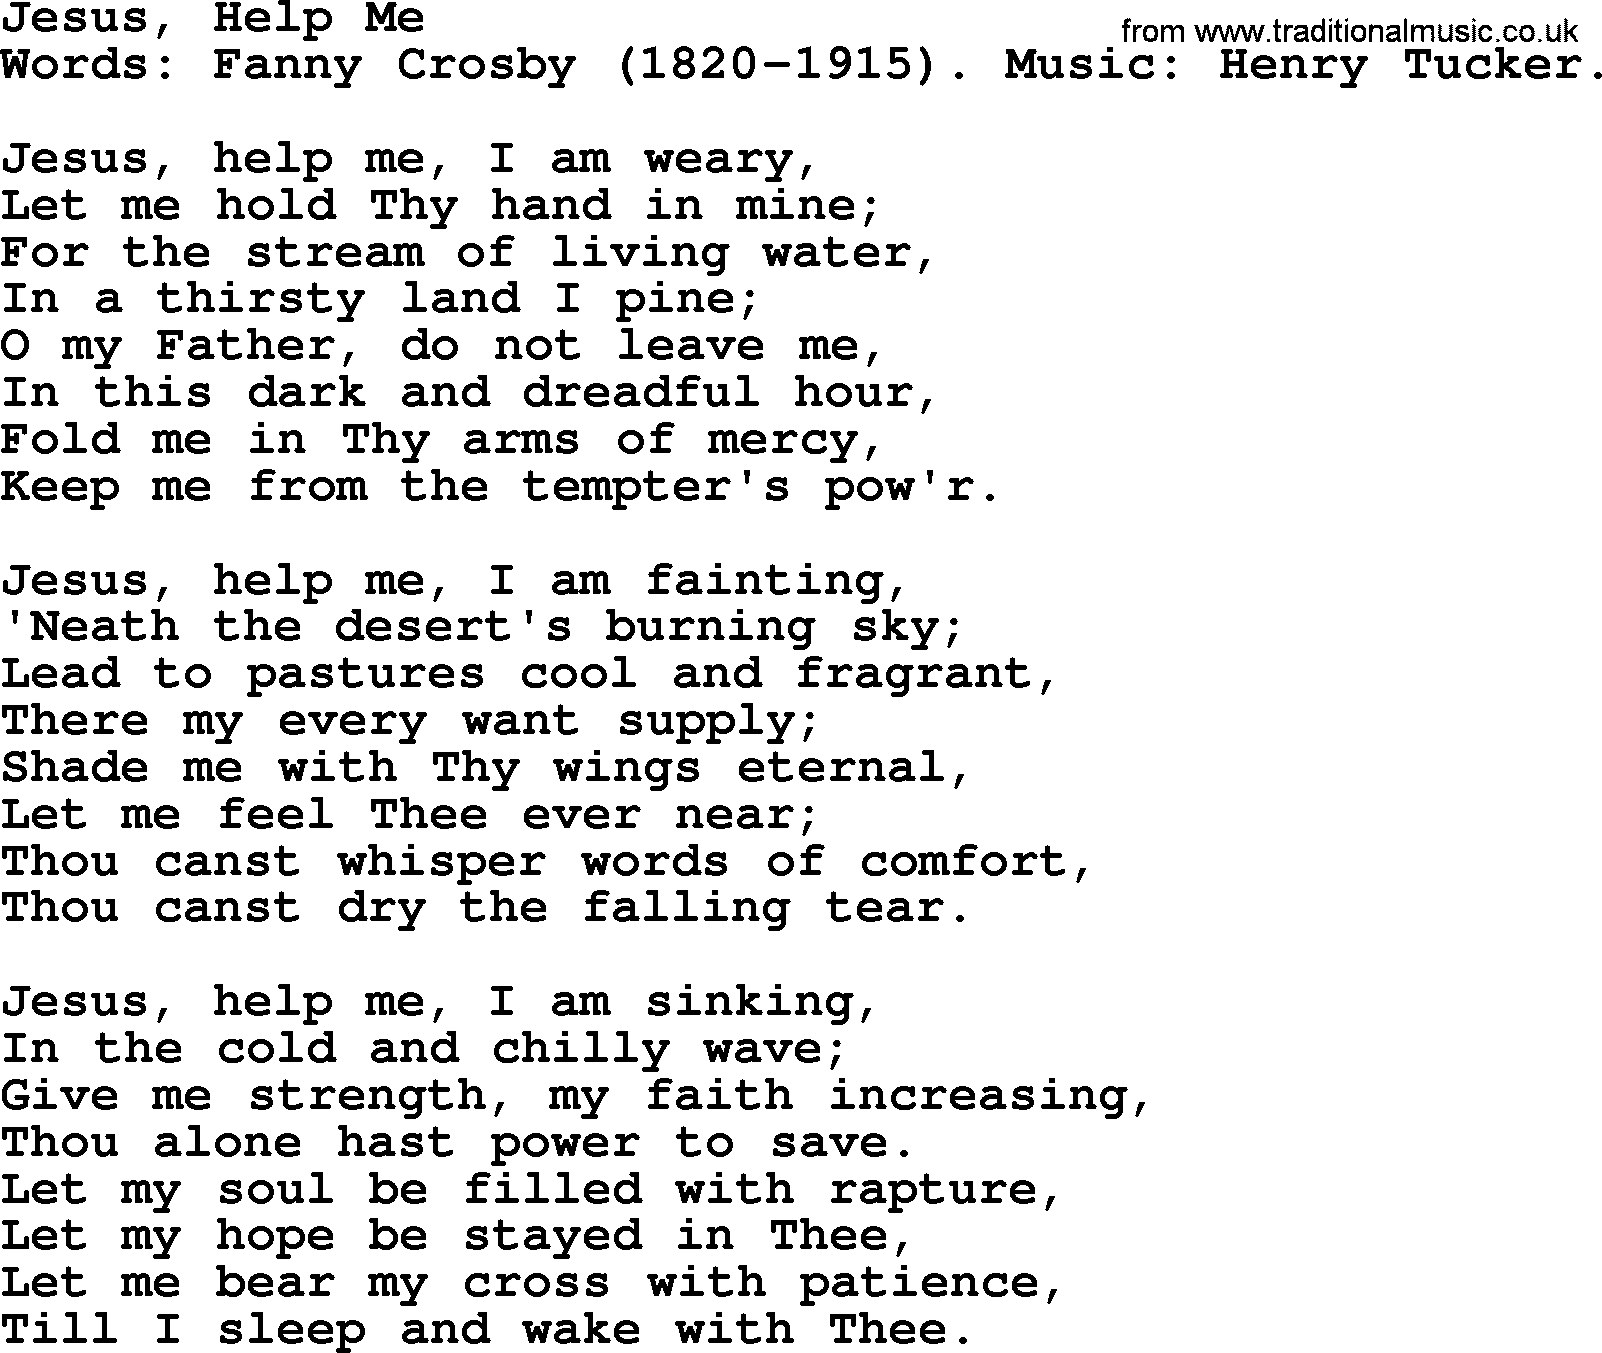 Fanny Crosby song: Jesus, Help Me, lyrics